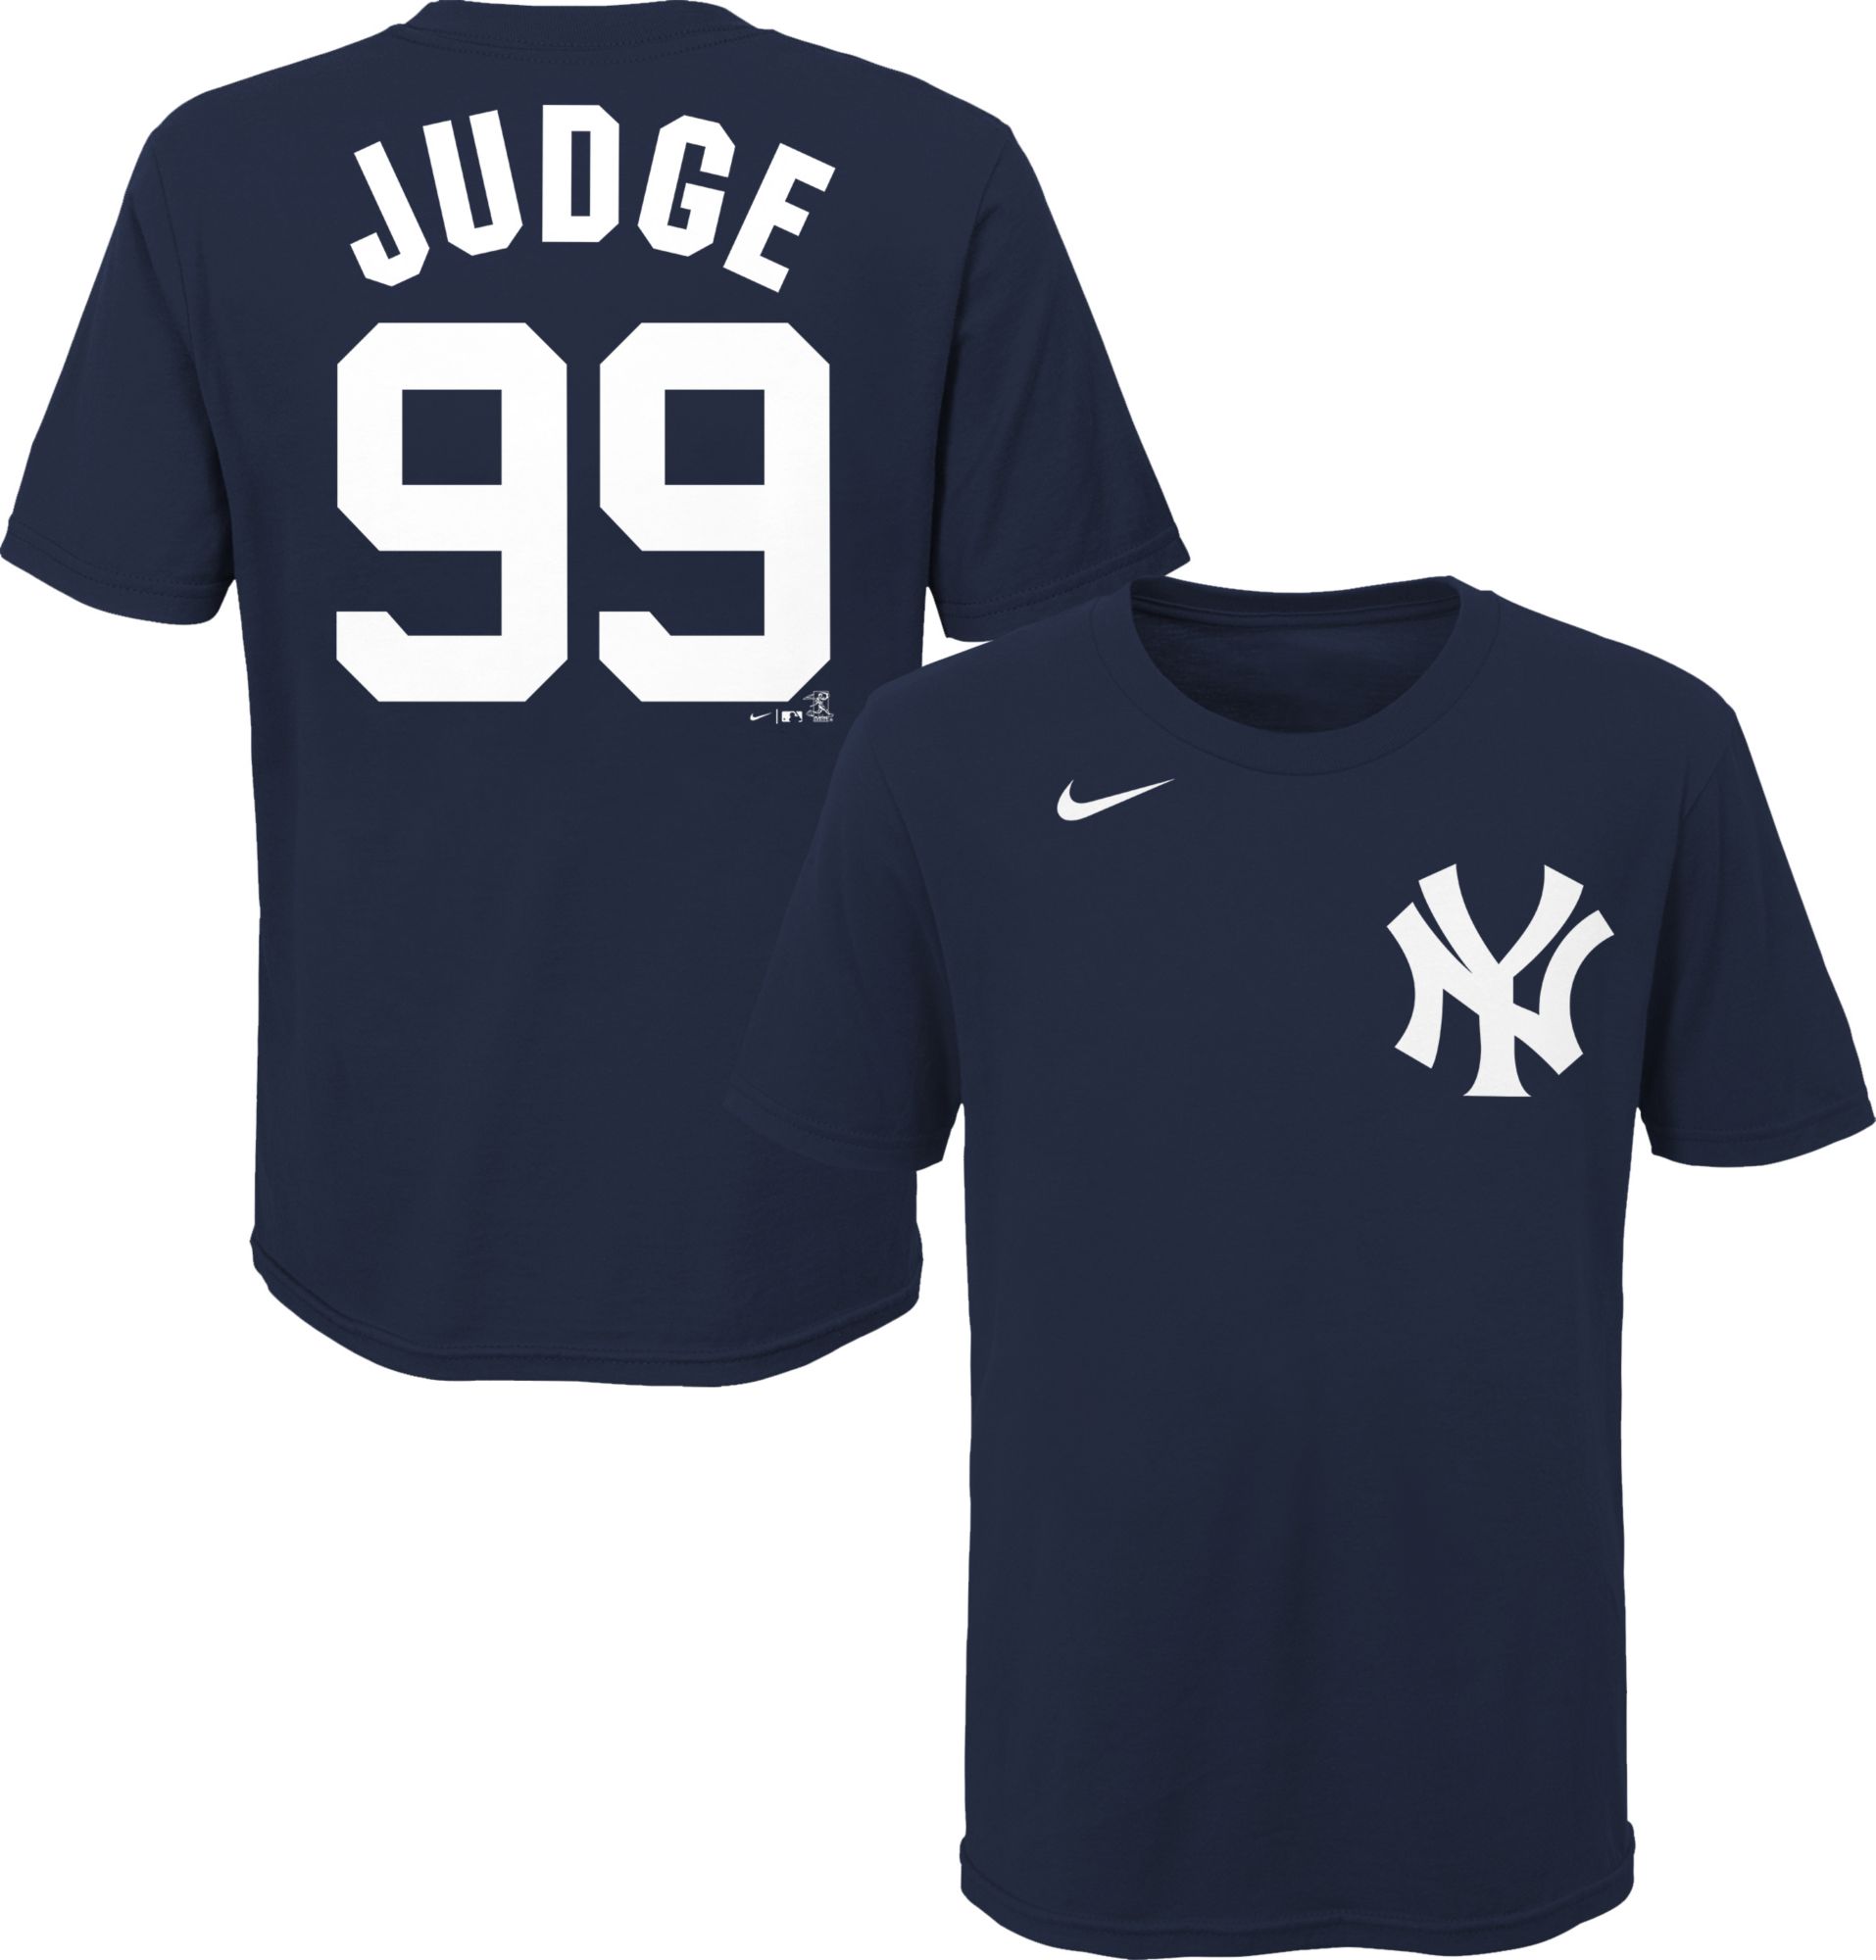 MURDERERS' ROW 2.0 New York Yankee T-shirts Aaron 